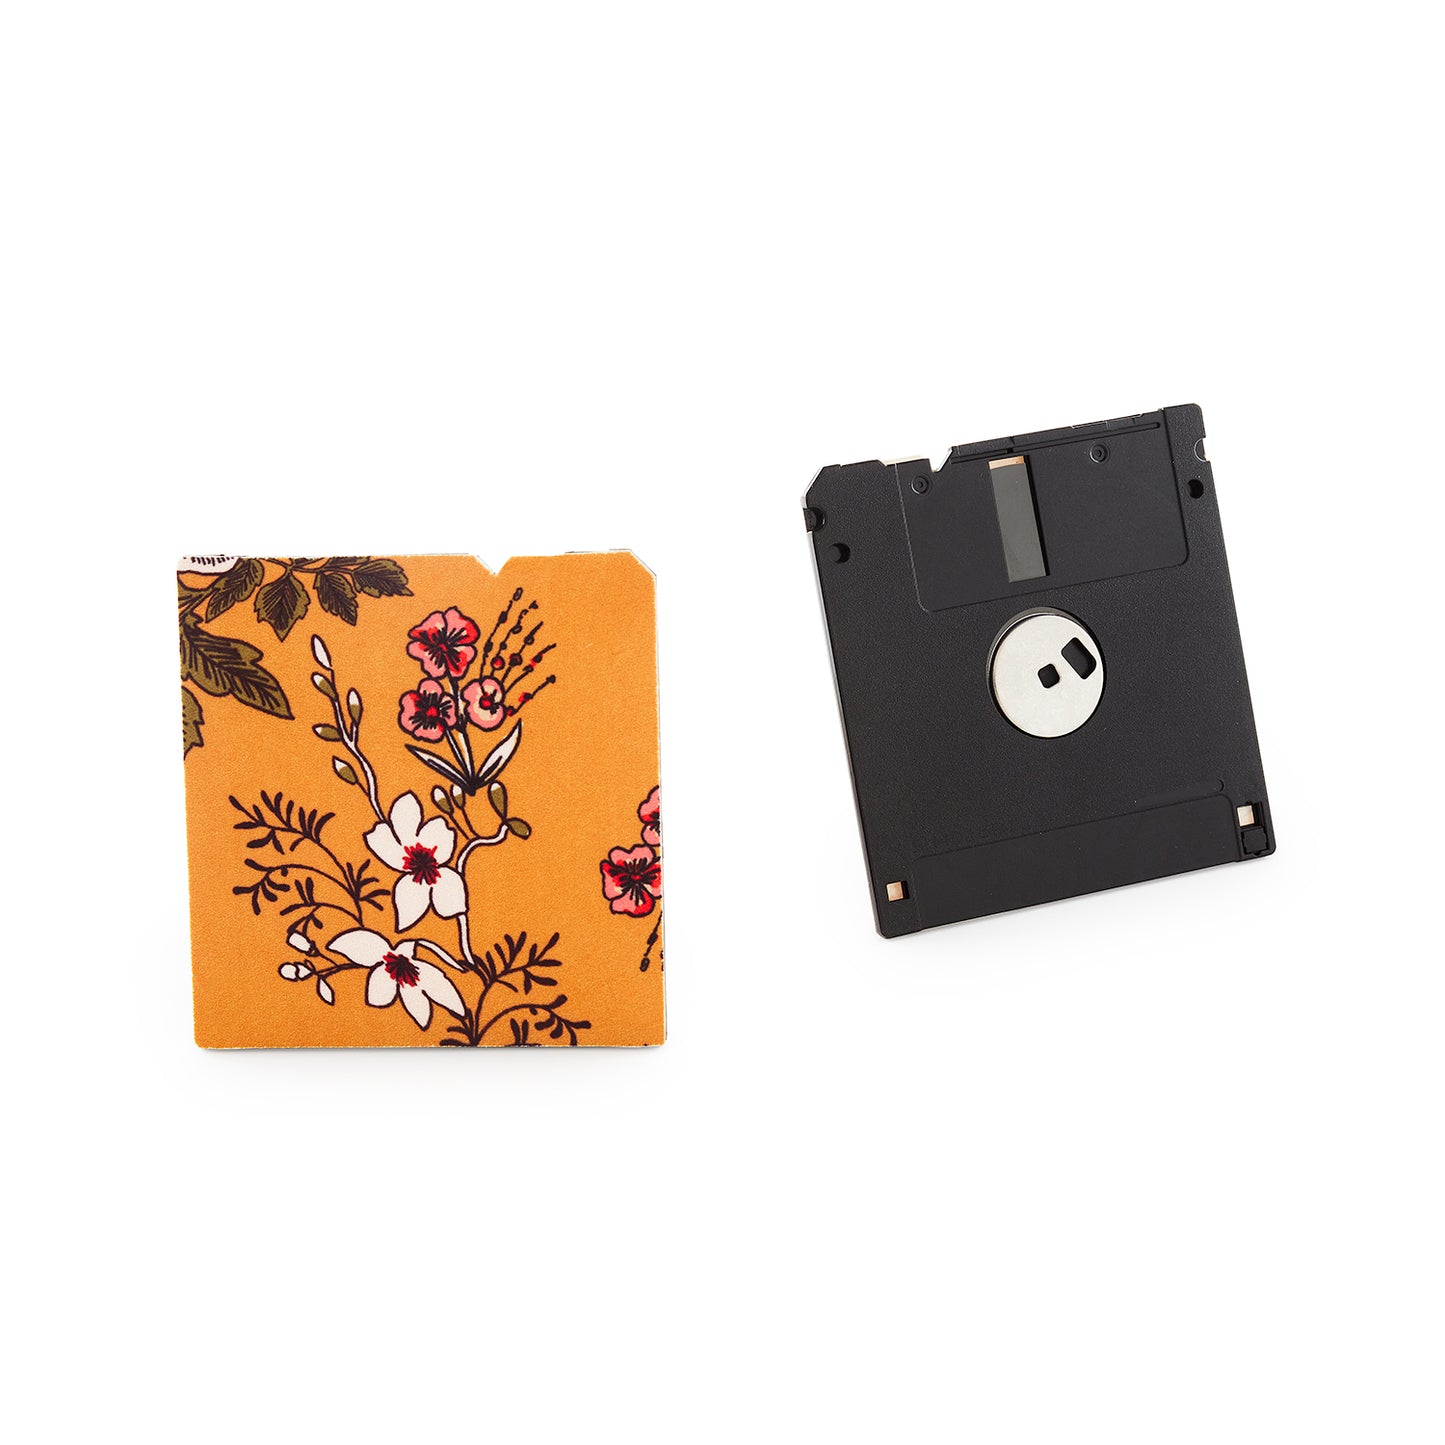 Marmalade Orange - Floppy Disk Coaster Set of 2